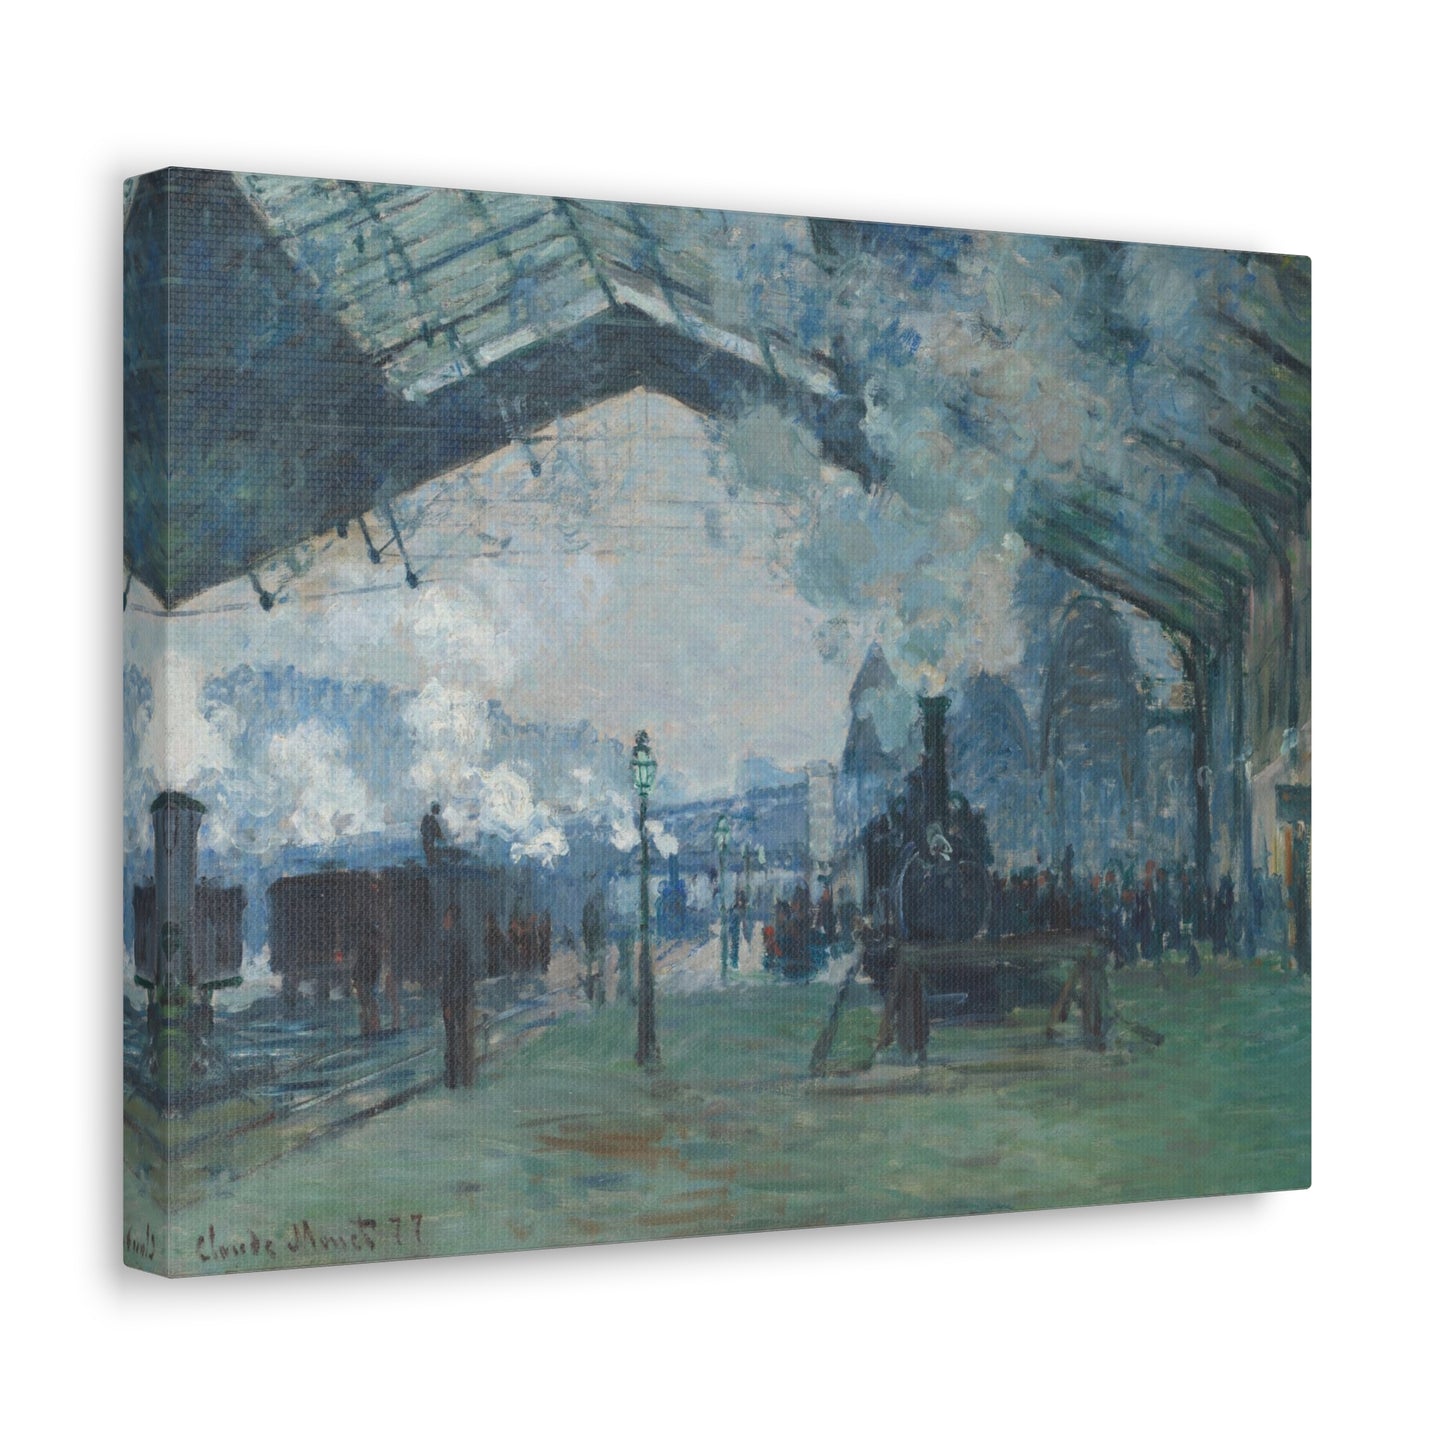 Arrival of the Normandy Train, Gare Saint-Lazare by Claude Monet - Canvas Print